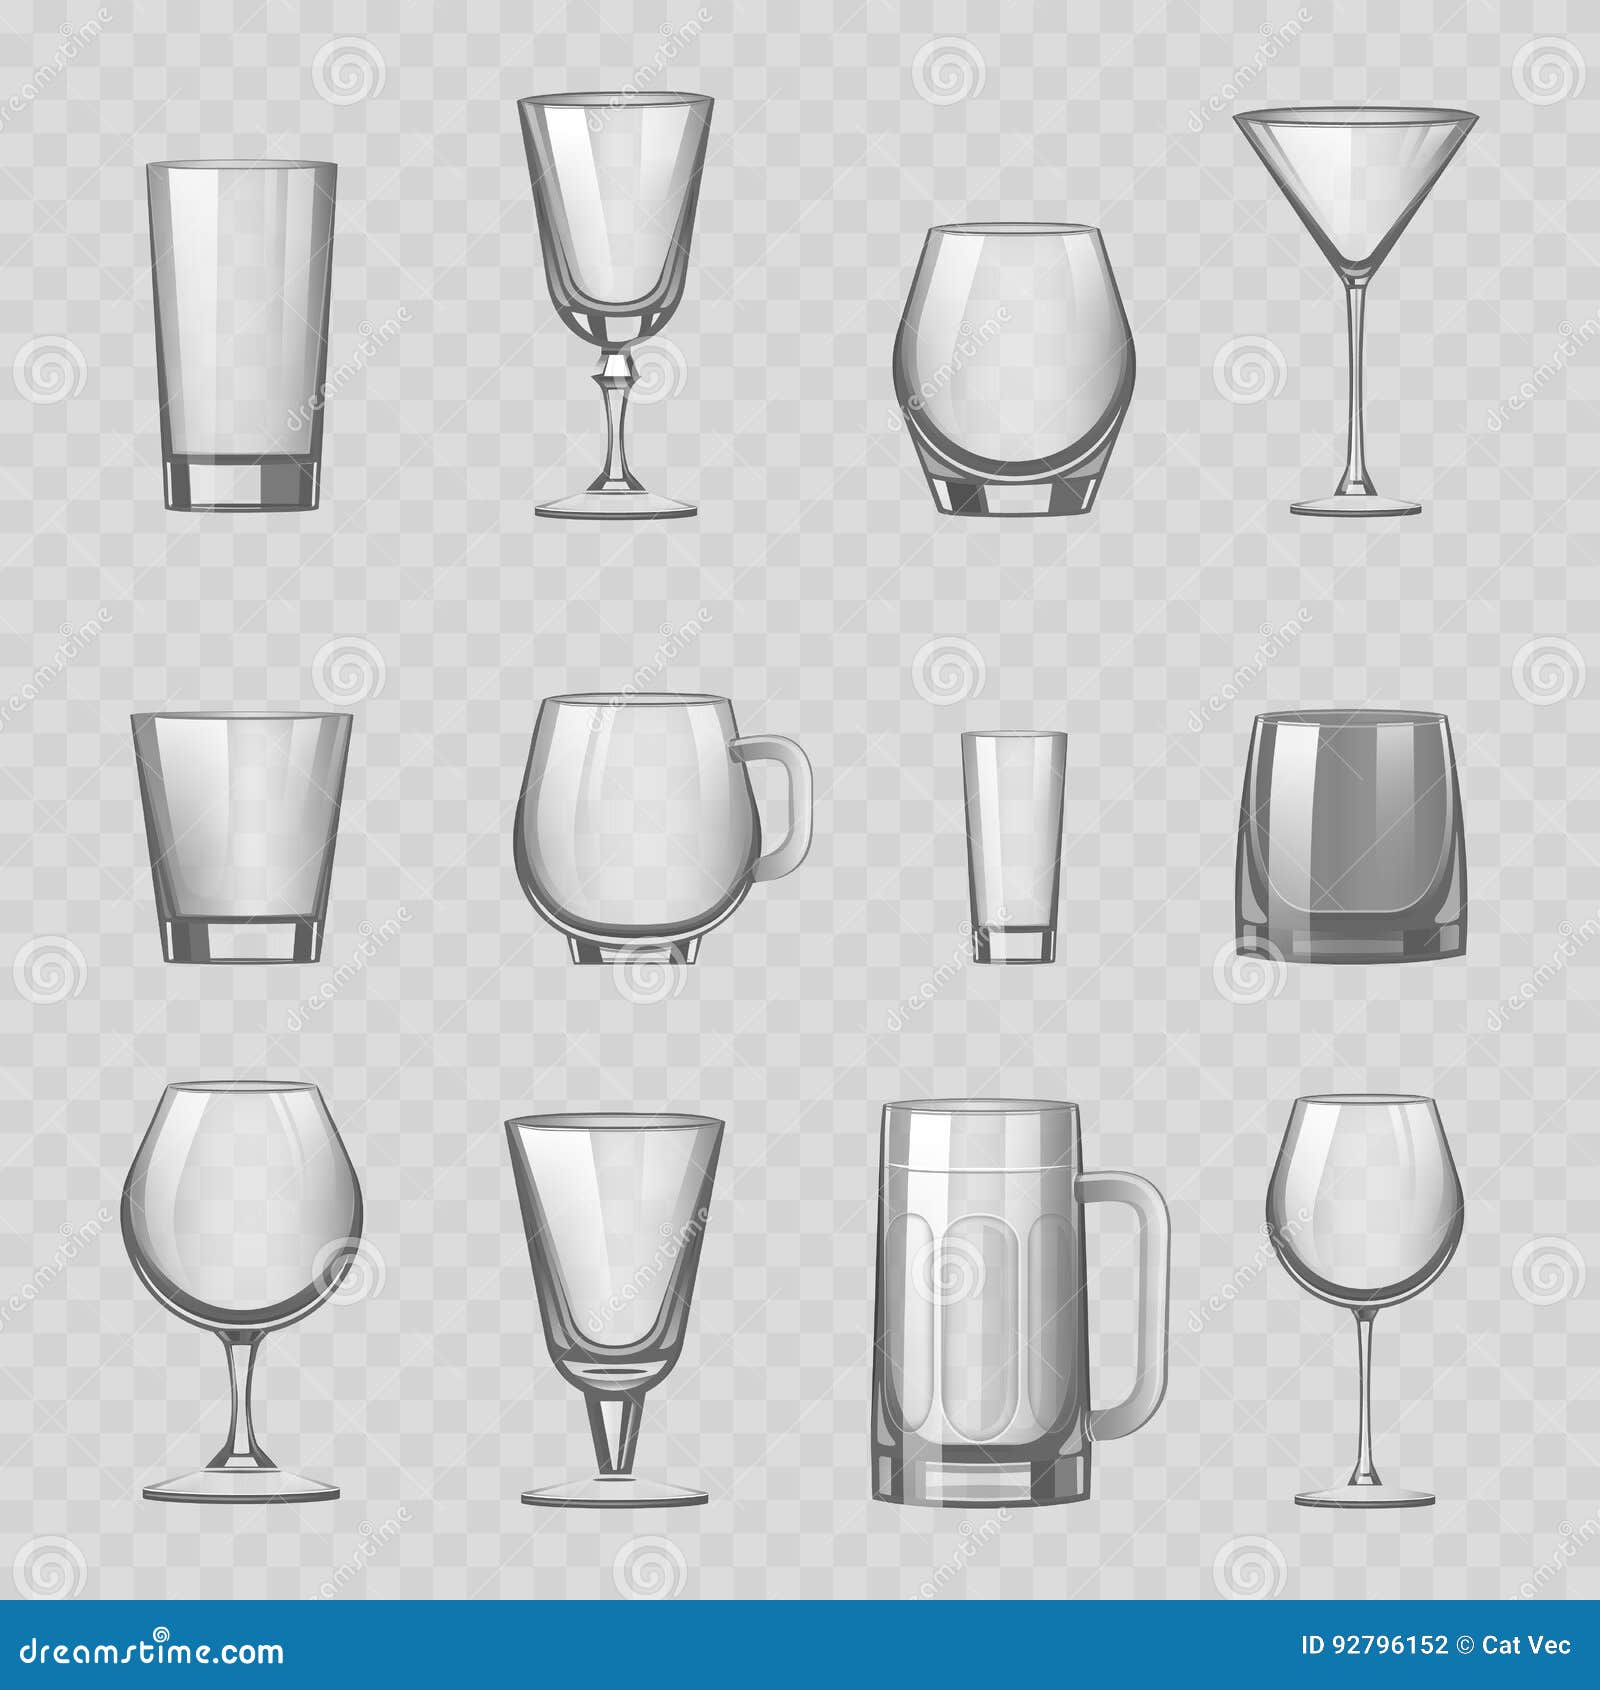 transparent empty glasses and stemware drinks tumbler mug cups reservoir vessel realistic  